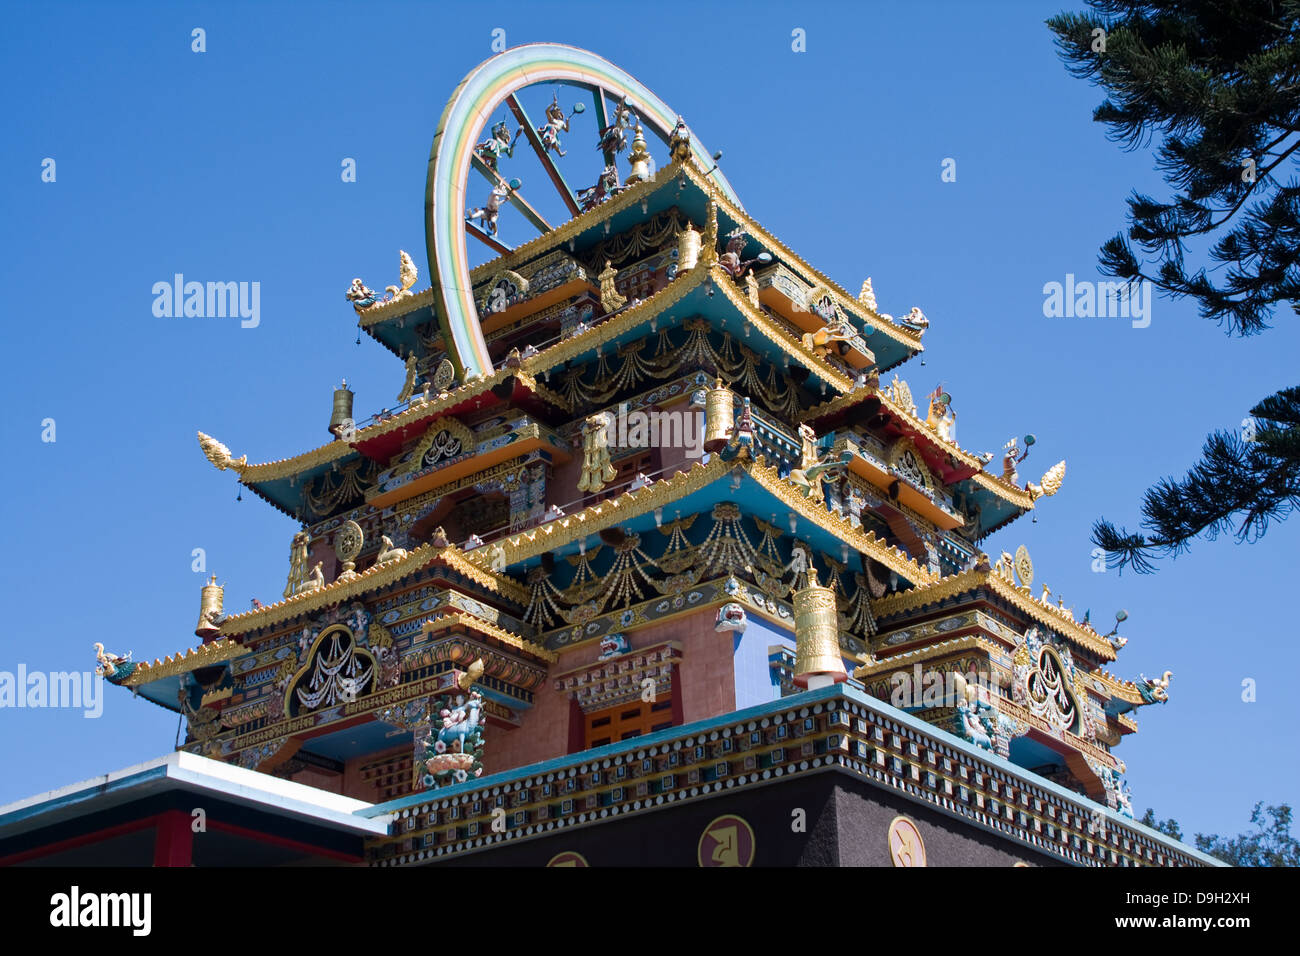 Asia, India, Karnataka, Bylakuppe, Golden Temple Stock Photo